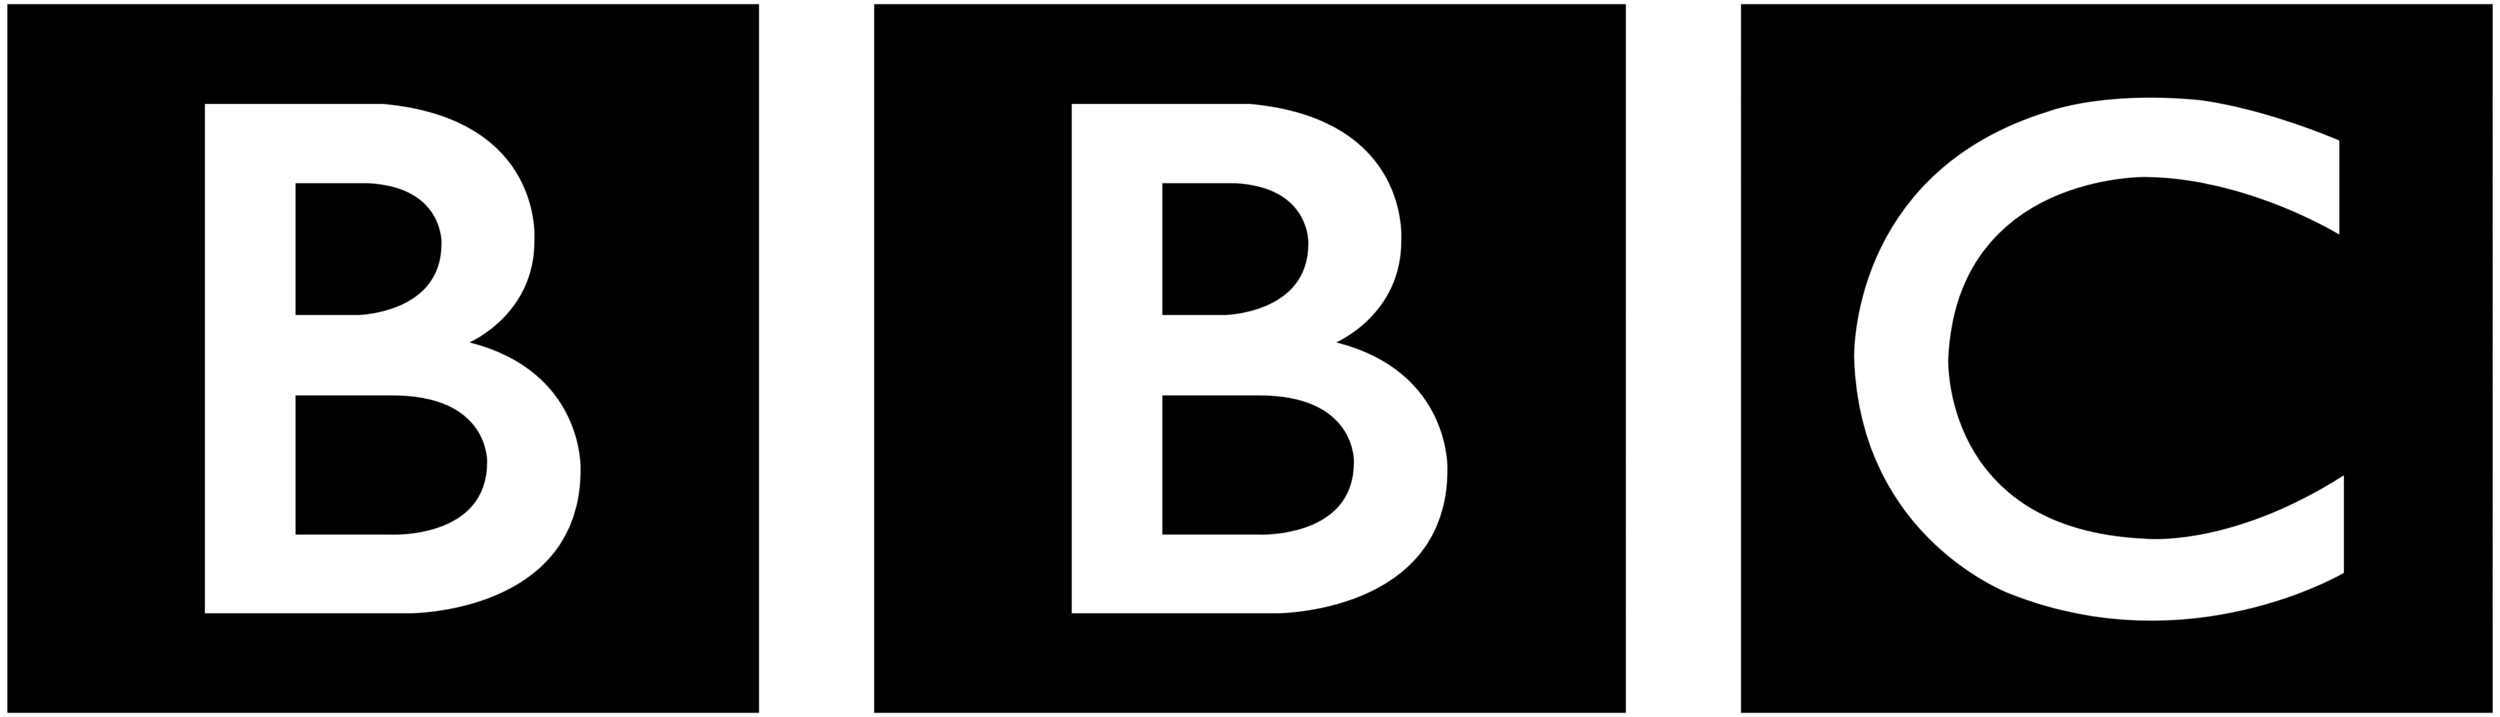 BBC_logo.png